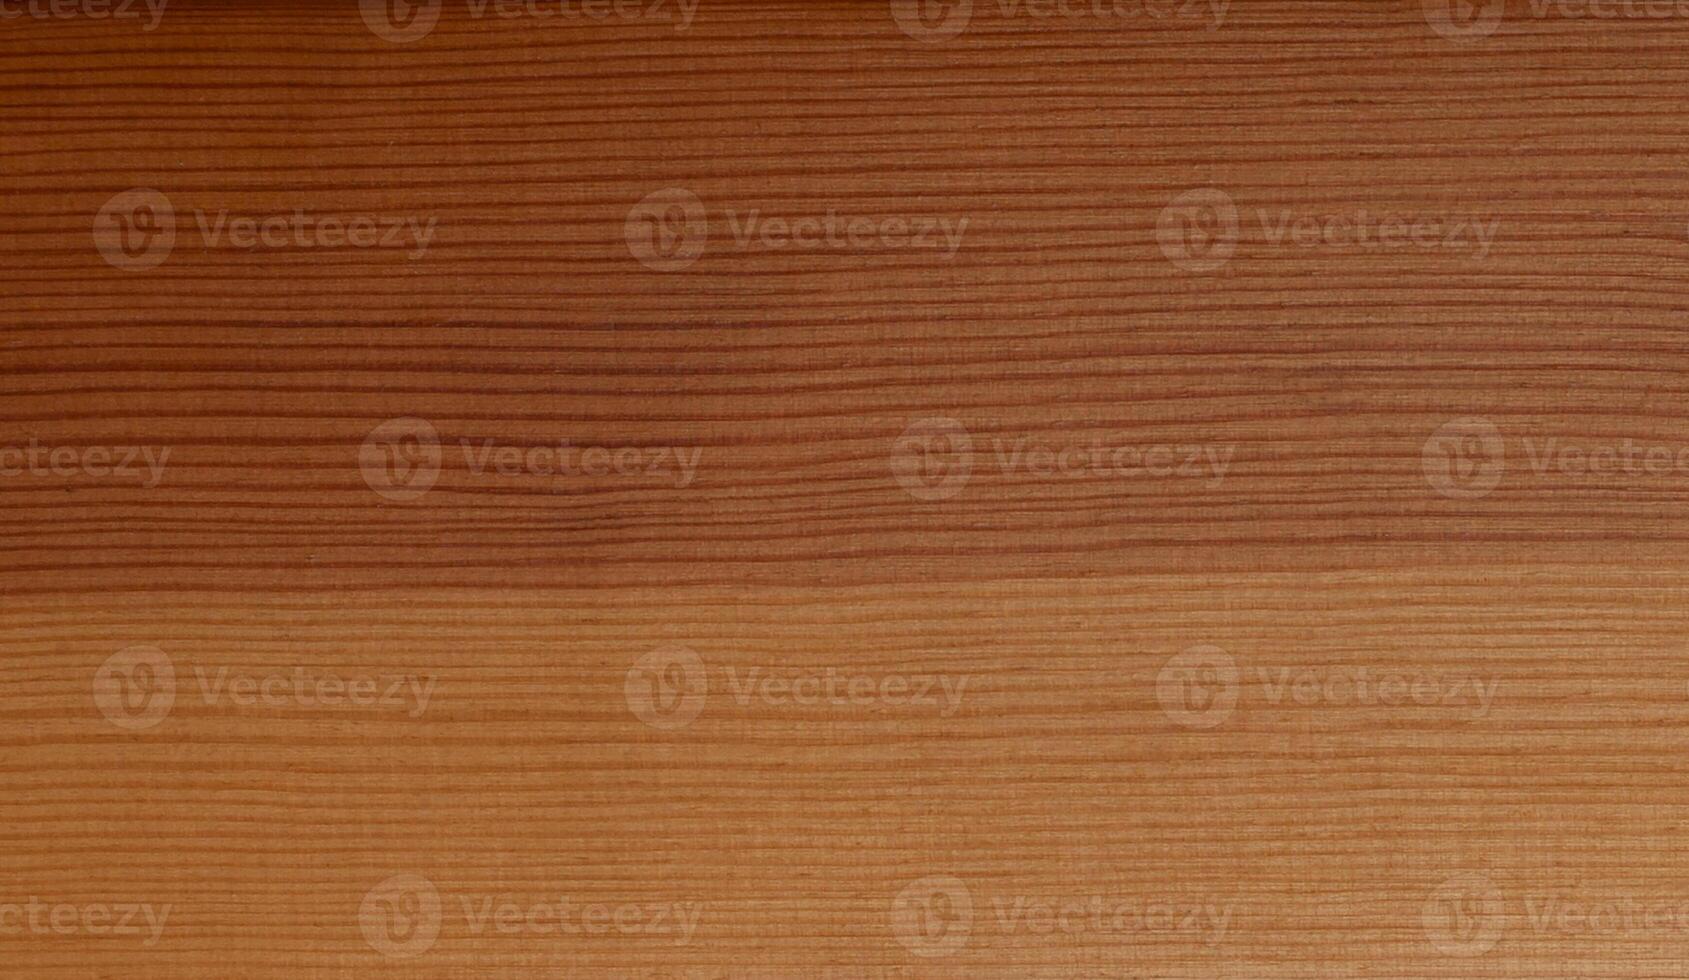 el superficie de el marrón madera textura foto